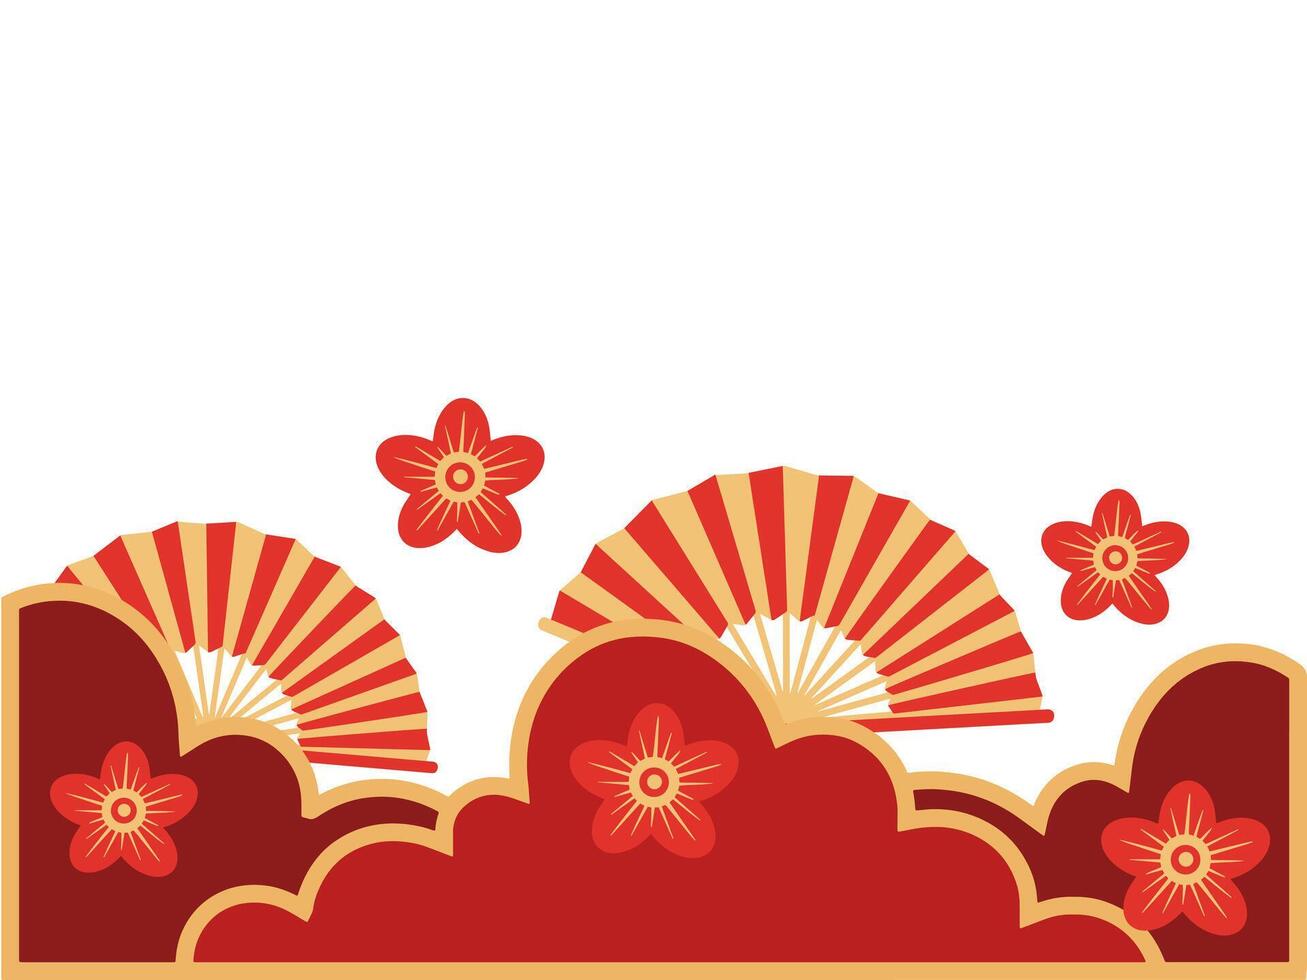 Chinese New Year Corner Border Background vector